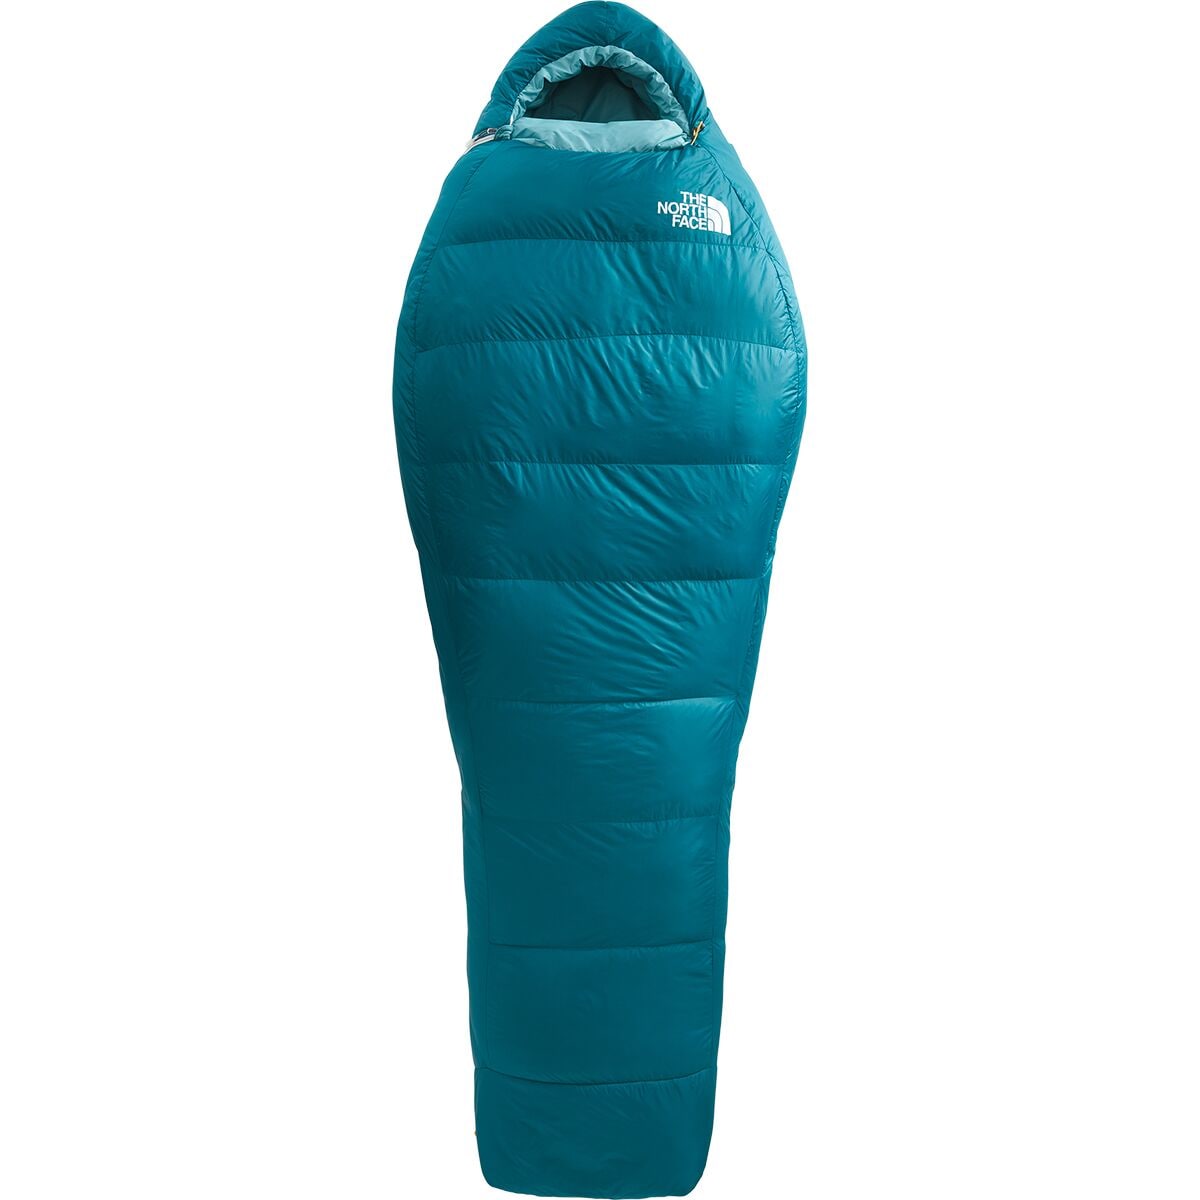 The North Face Trail Lite Sleeping Bag: 20F Down